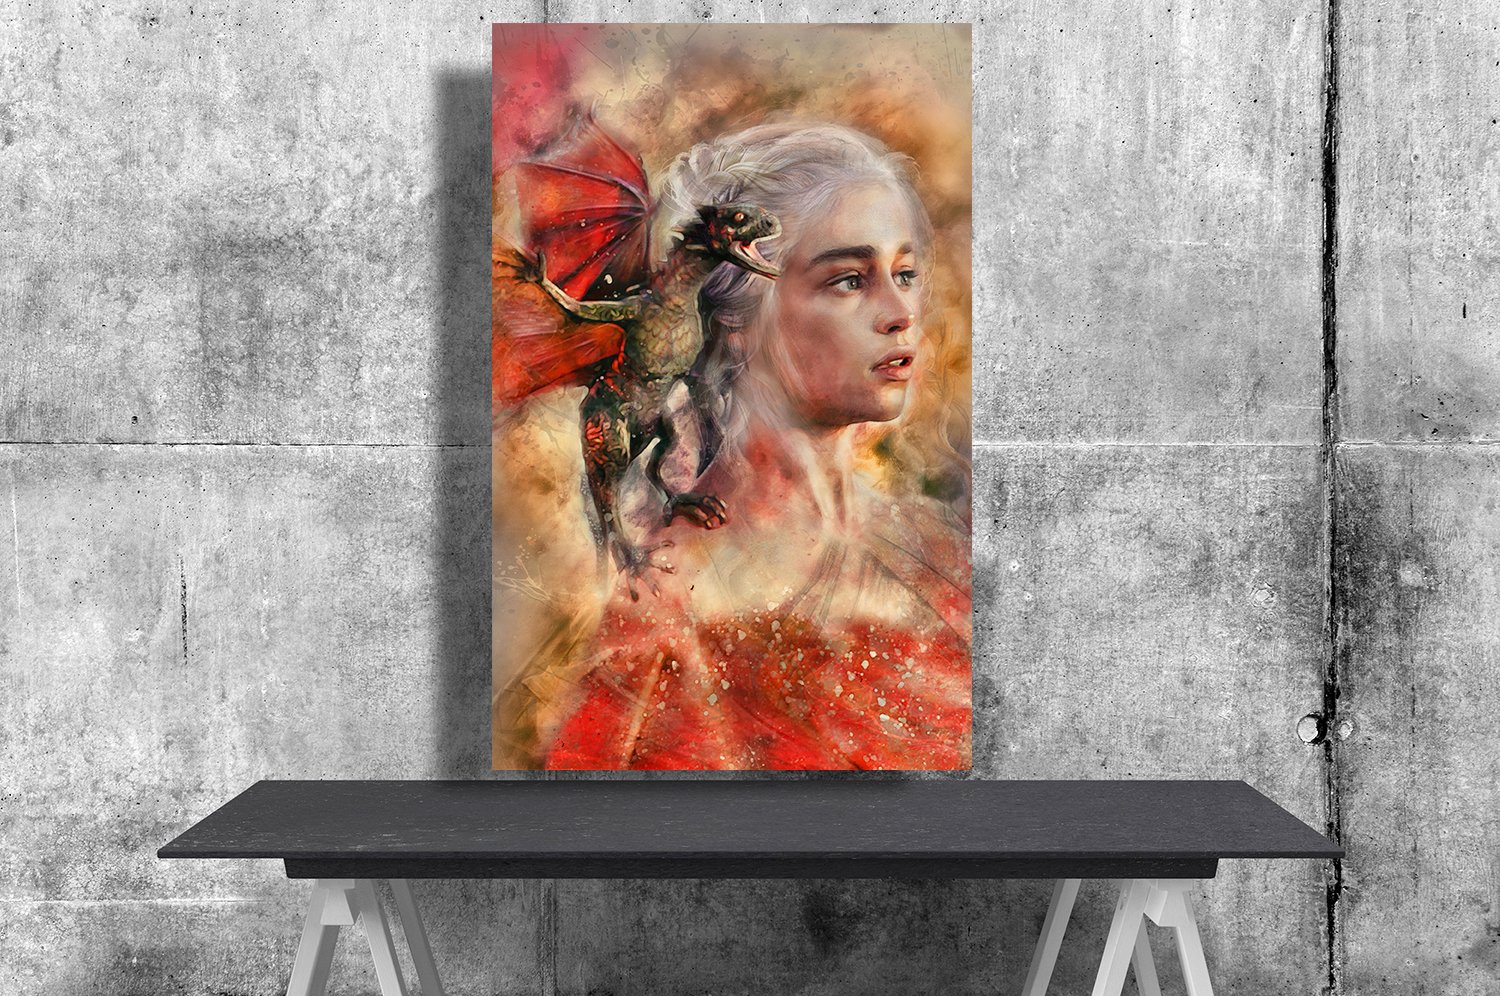 Game of Thrones, Daenerys Targaryen, Emilia Clarke 24"x35" (60cm/90cm) Canvas Print